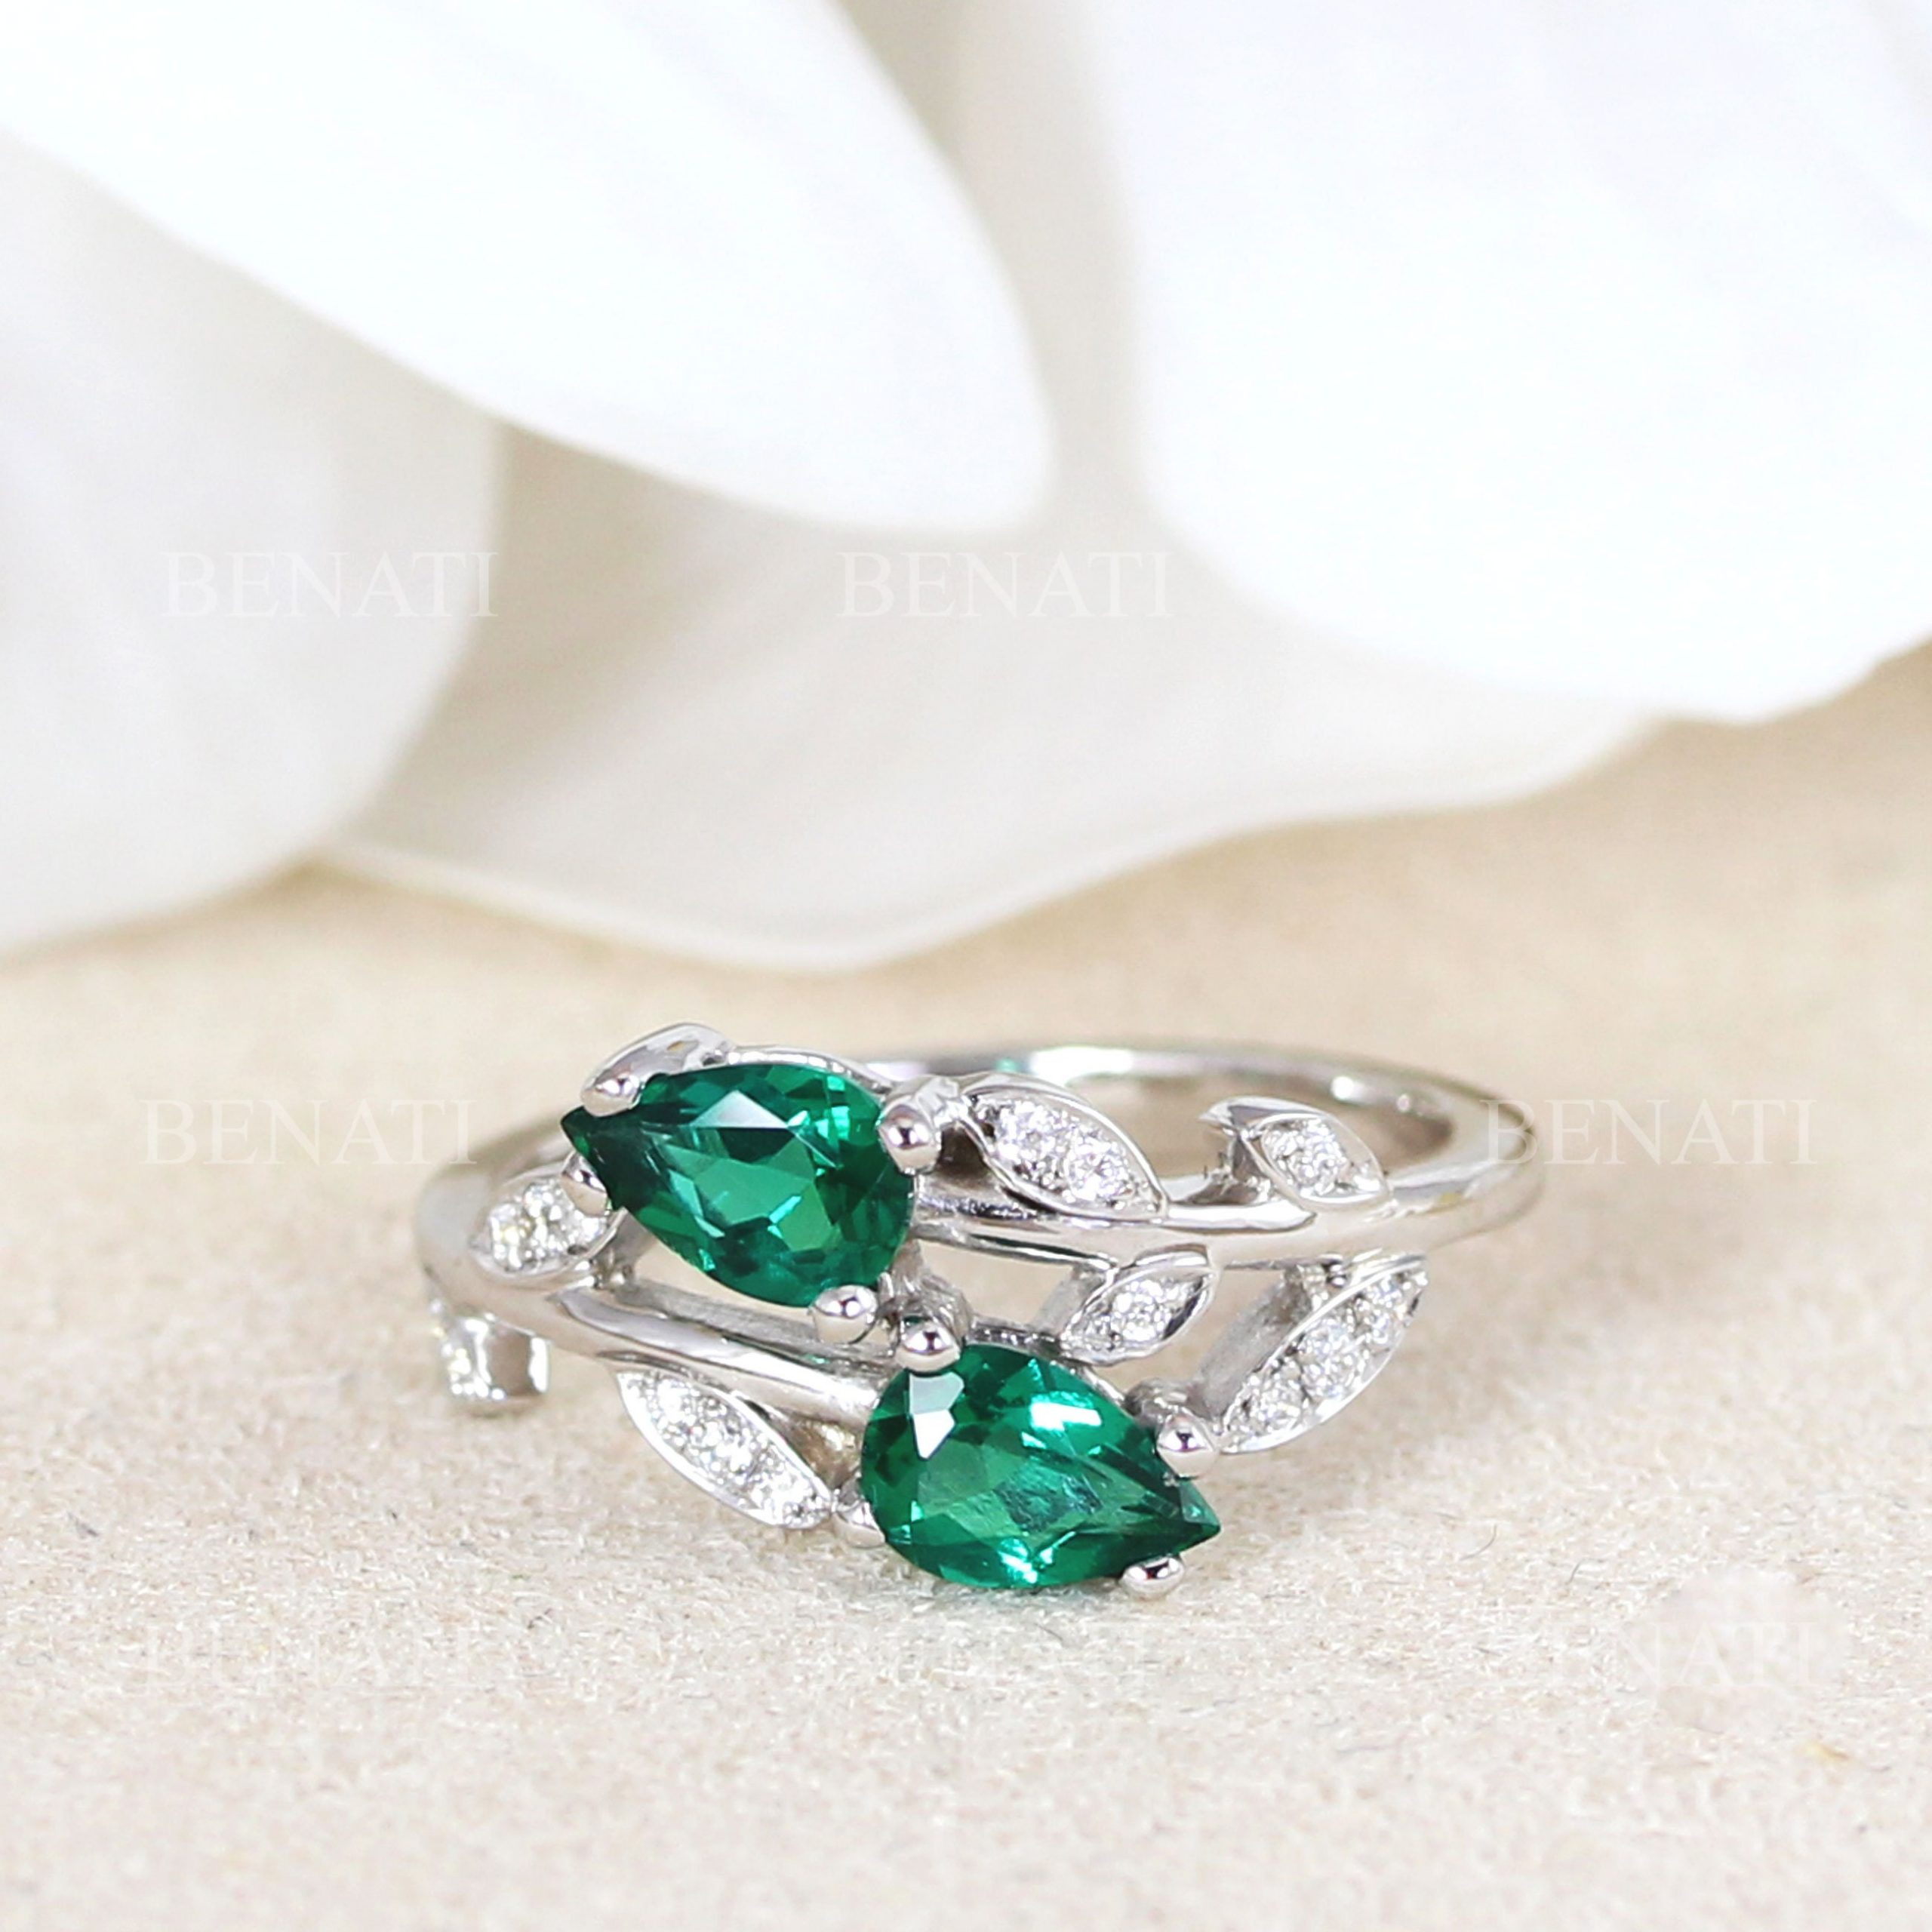 Nature Inspired Pear Cut Emerald Leaves Ring Alternative Engagement Ring Benati 0850